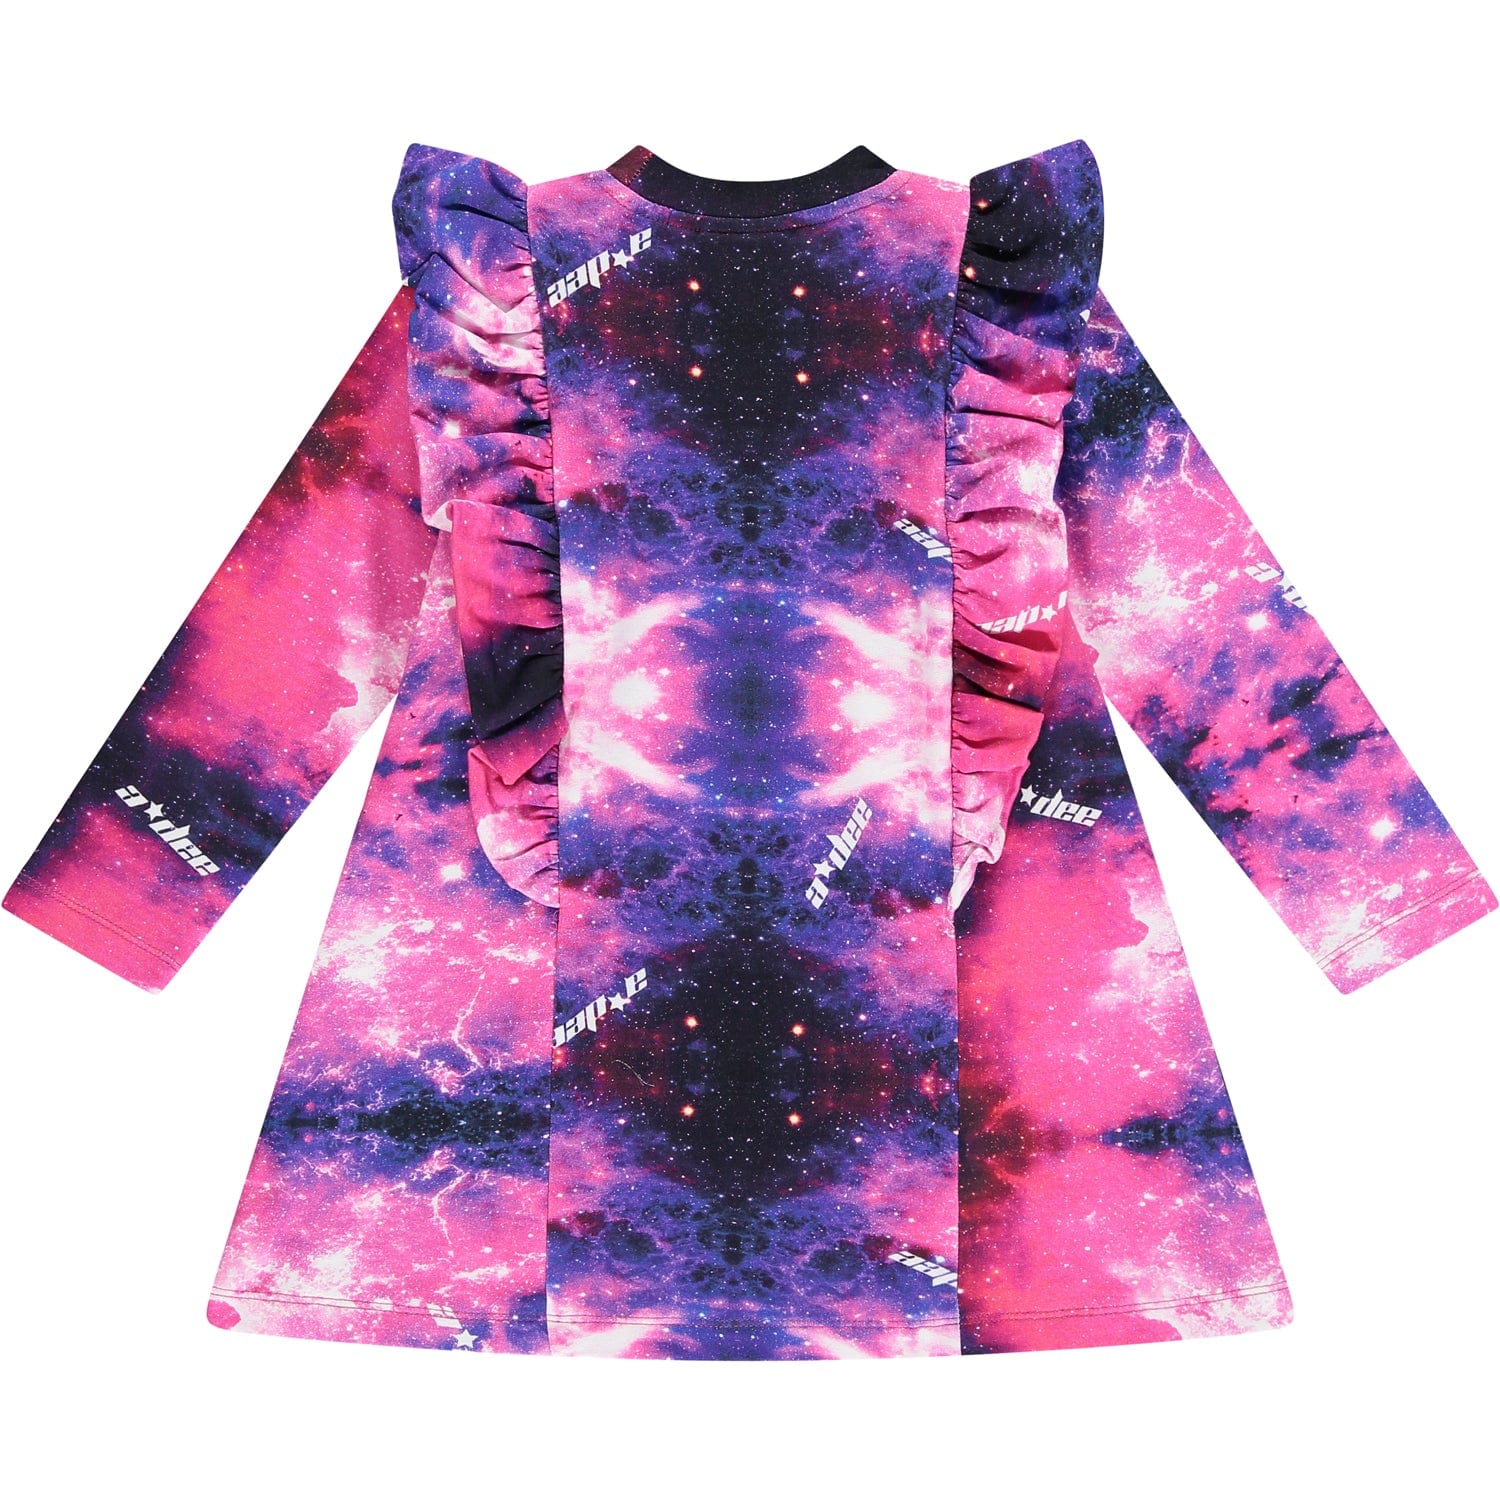 A DEE - Skye Frill Galaxy Print Dress - Pink Glaze